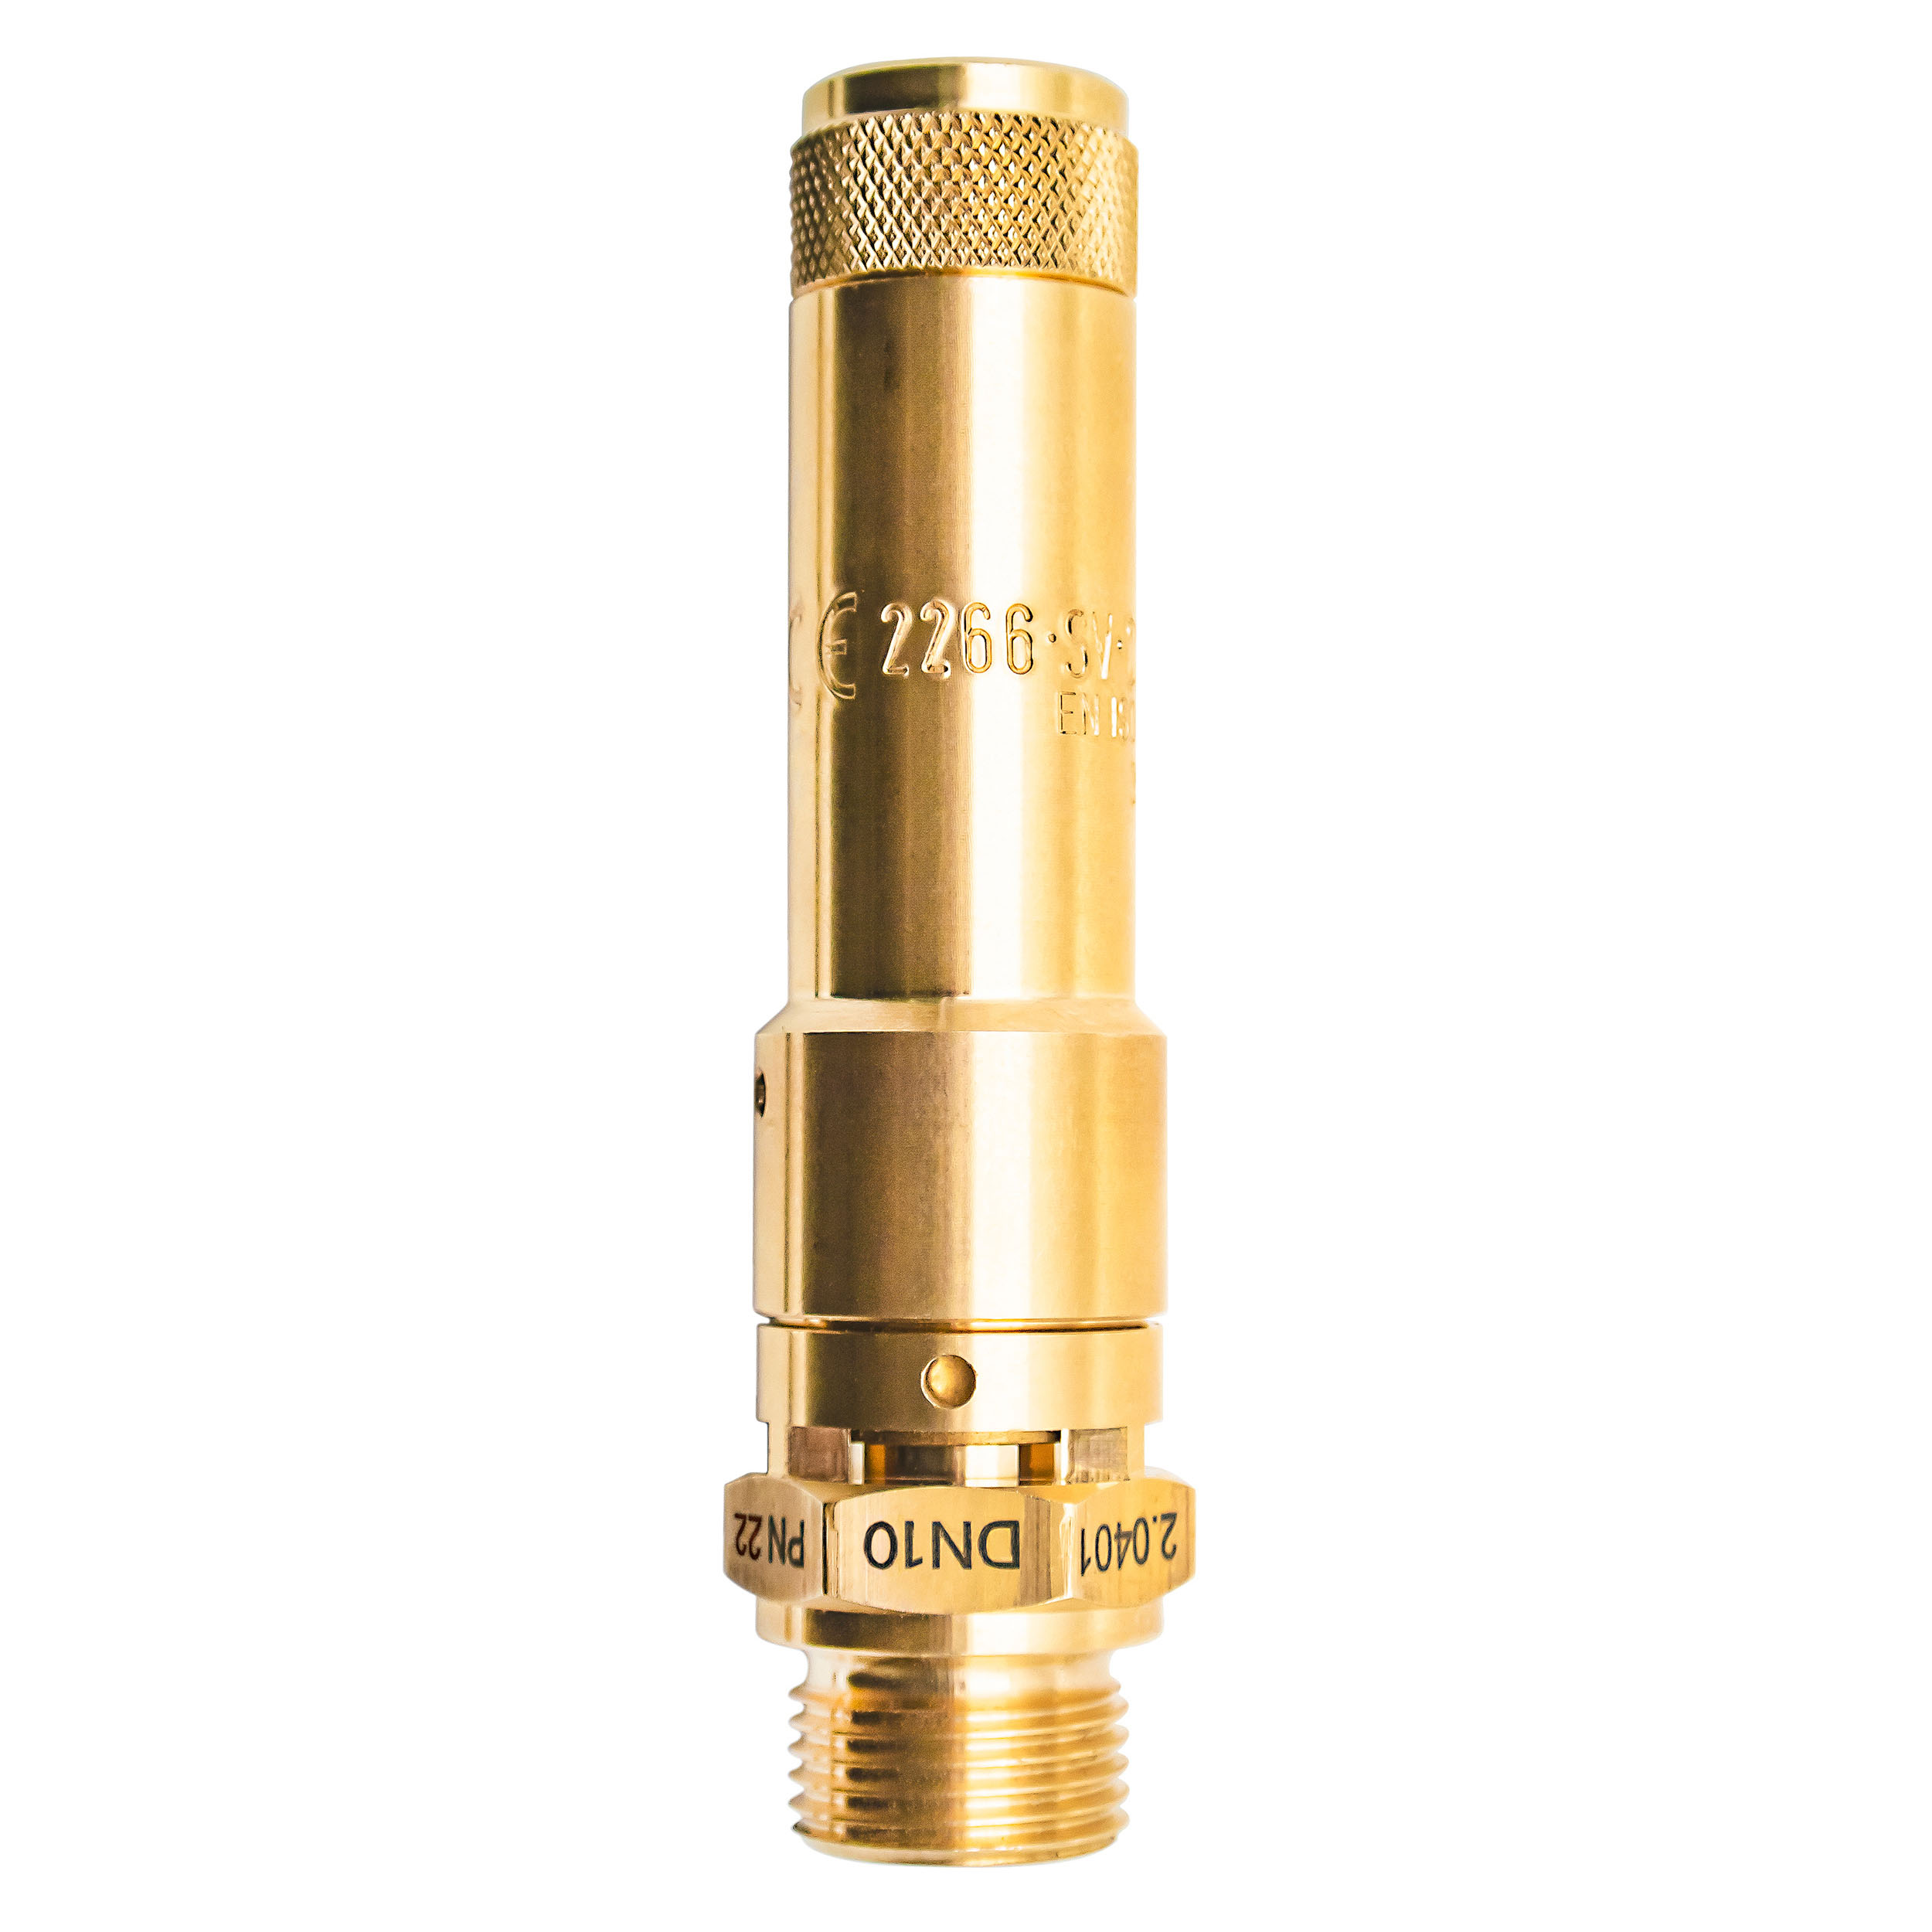 Component-tested safety valve DN 10, G¾, pressure: 8.6-11.5 bar